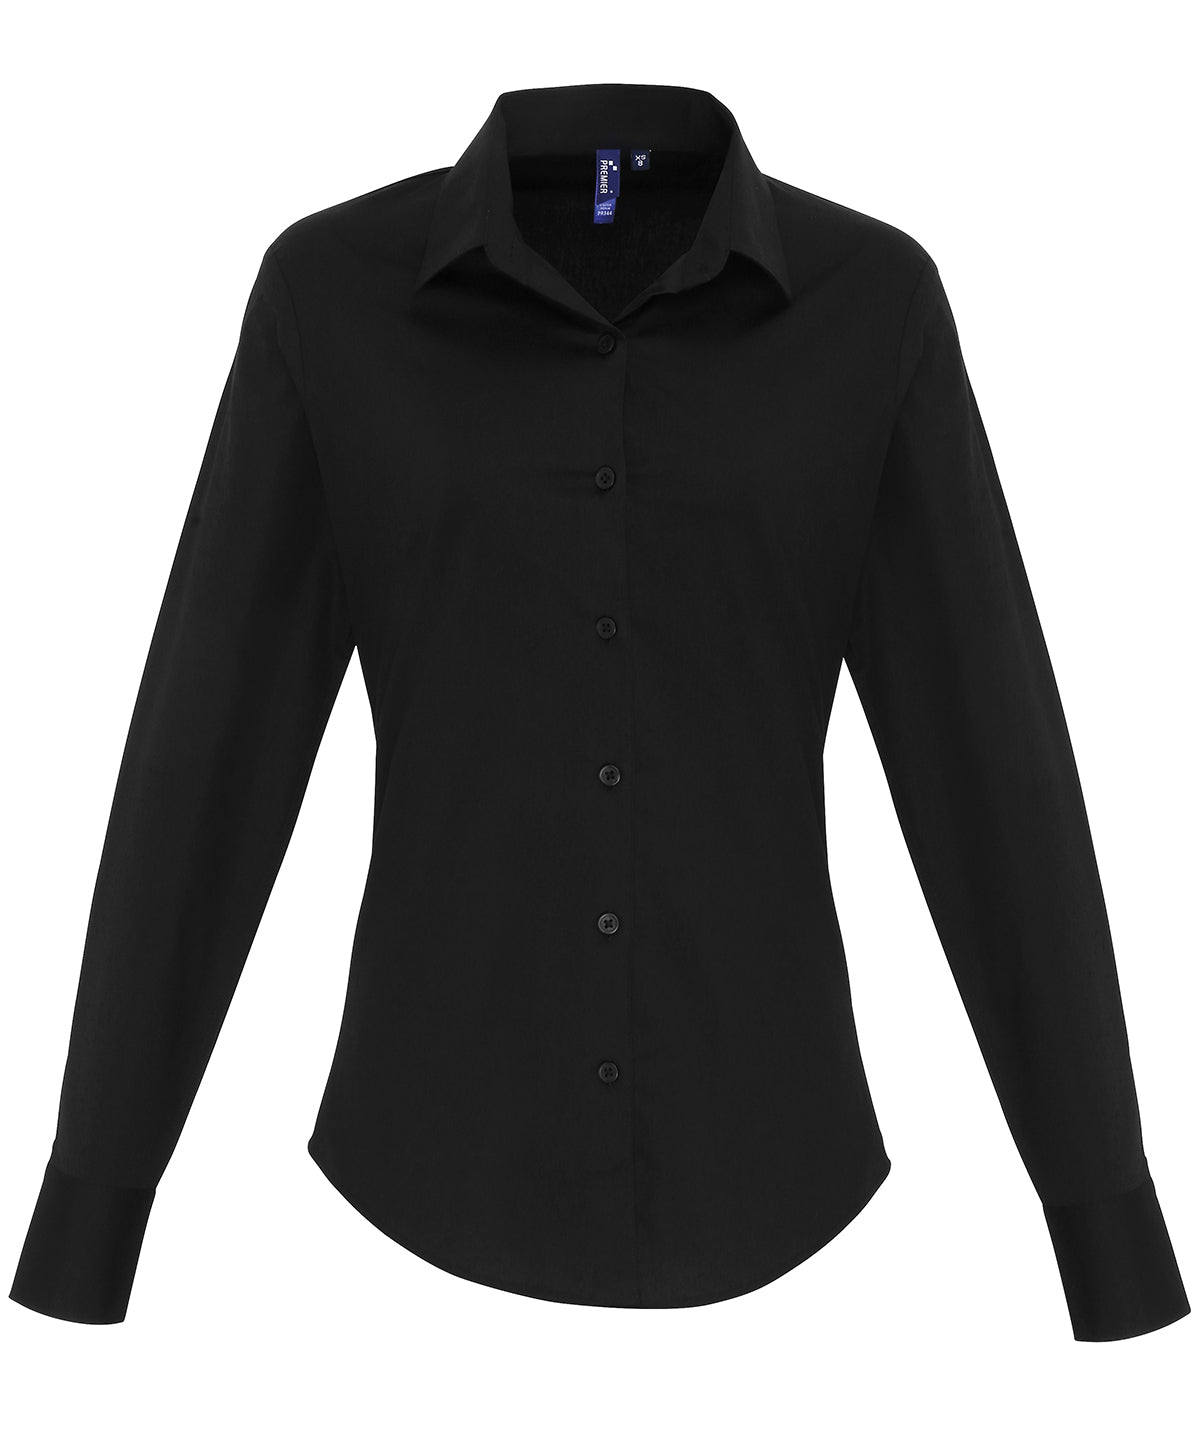 Womens stretch fit cotton poplin long sleeve blouse | Black